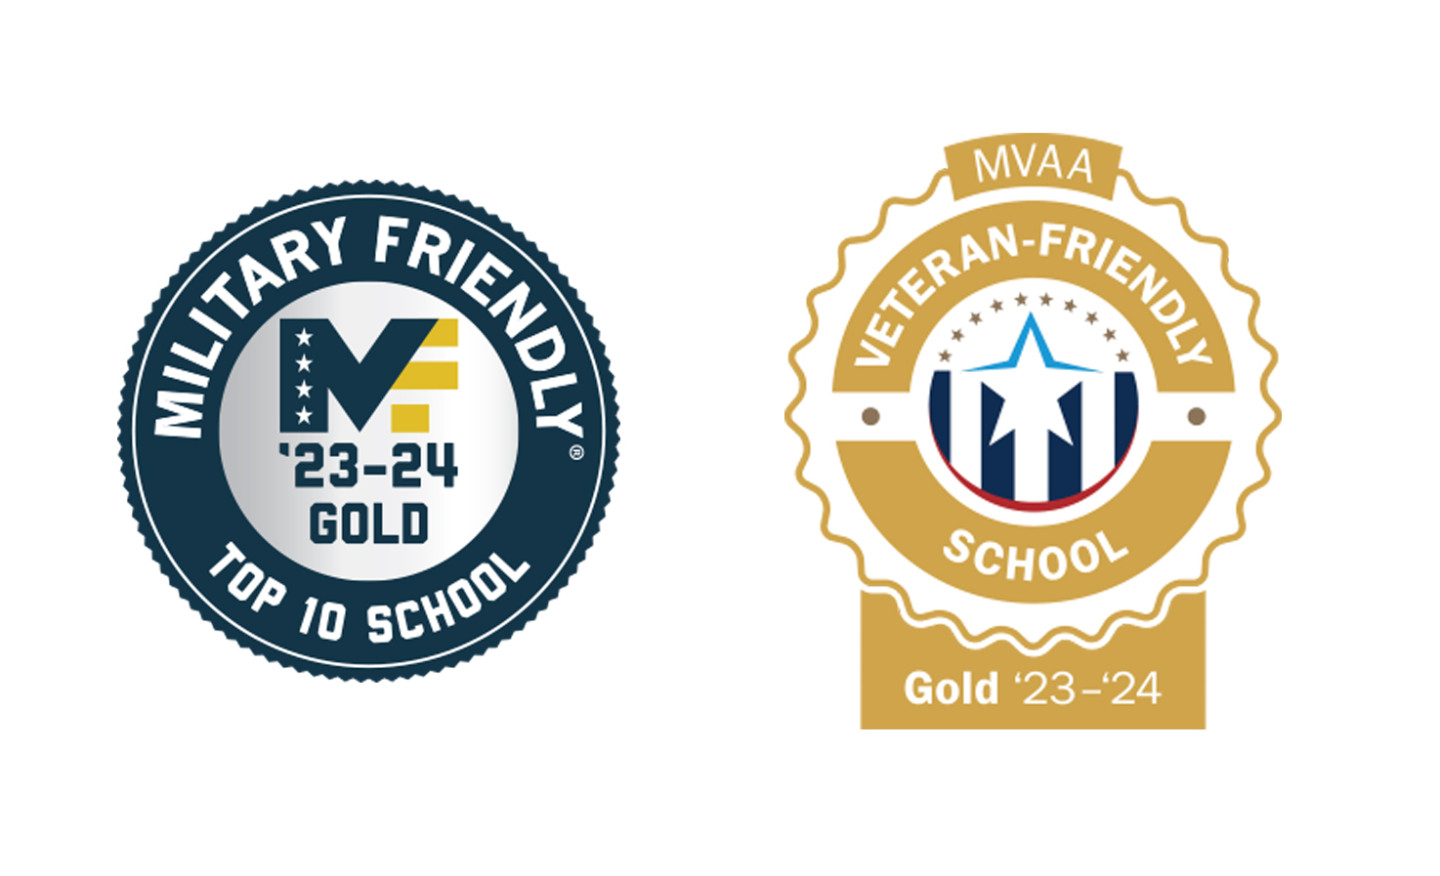 Military Friendly Top Ten School Award and Veteran Friendly School Gold Award